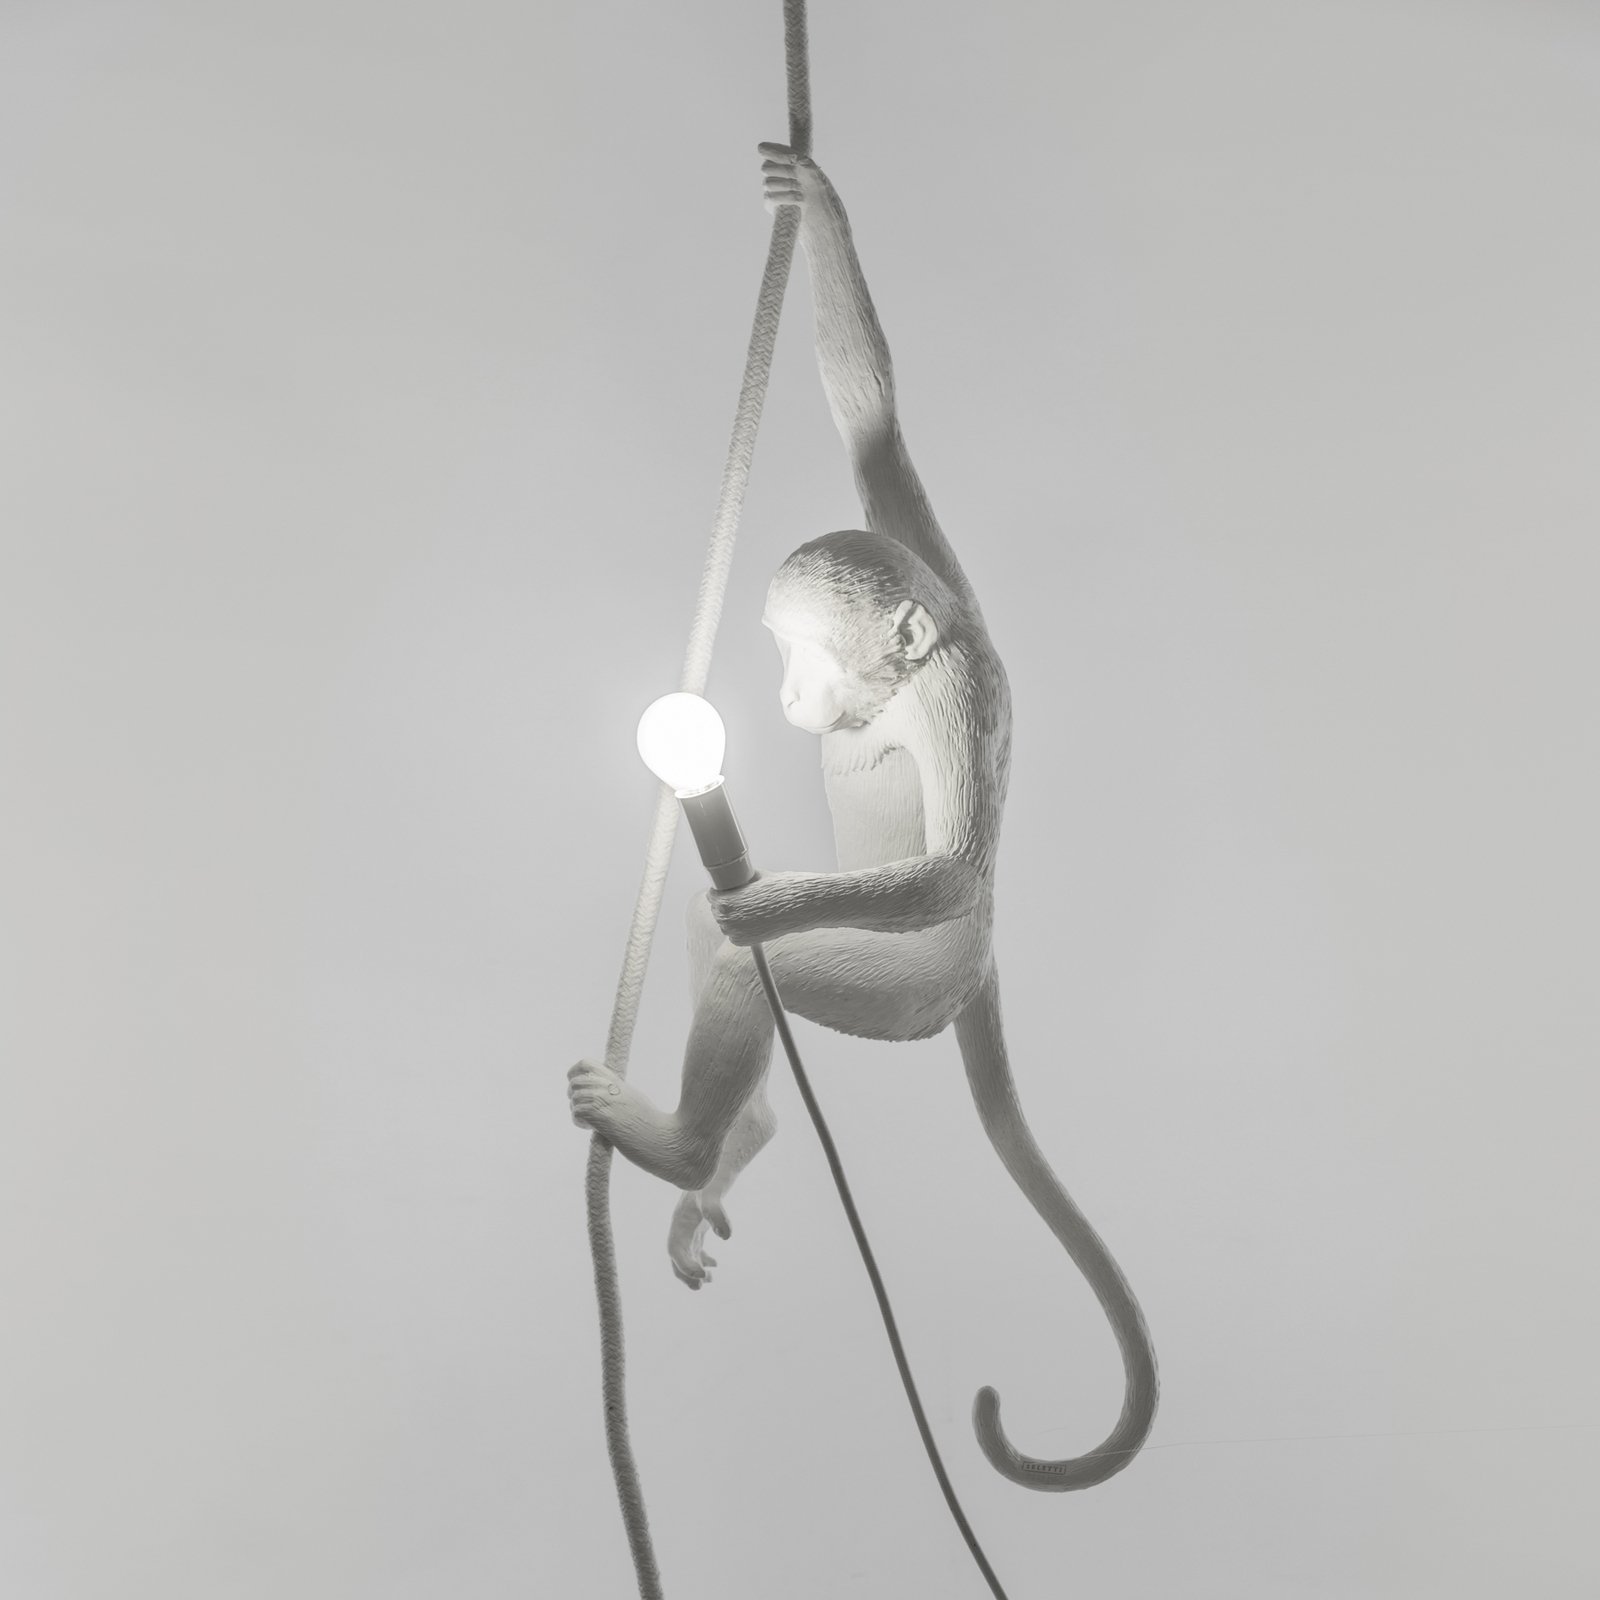 LED decoratie-hanglamp Monkey Lamp, wit, hangend